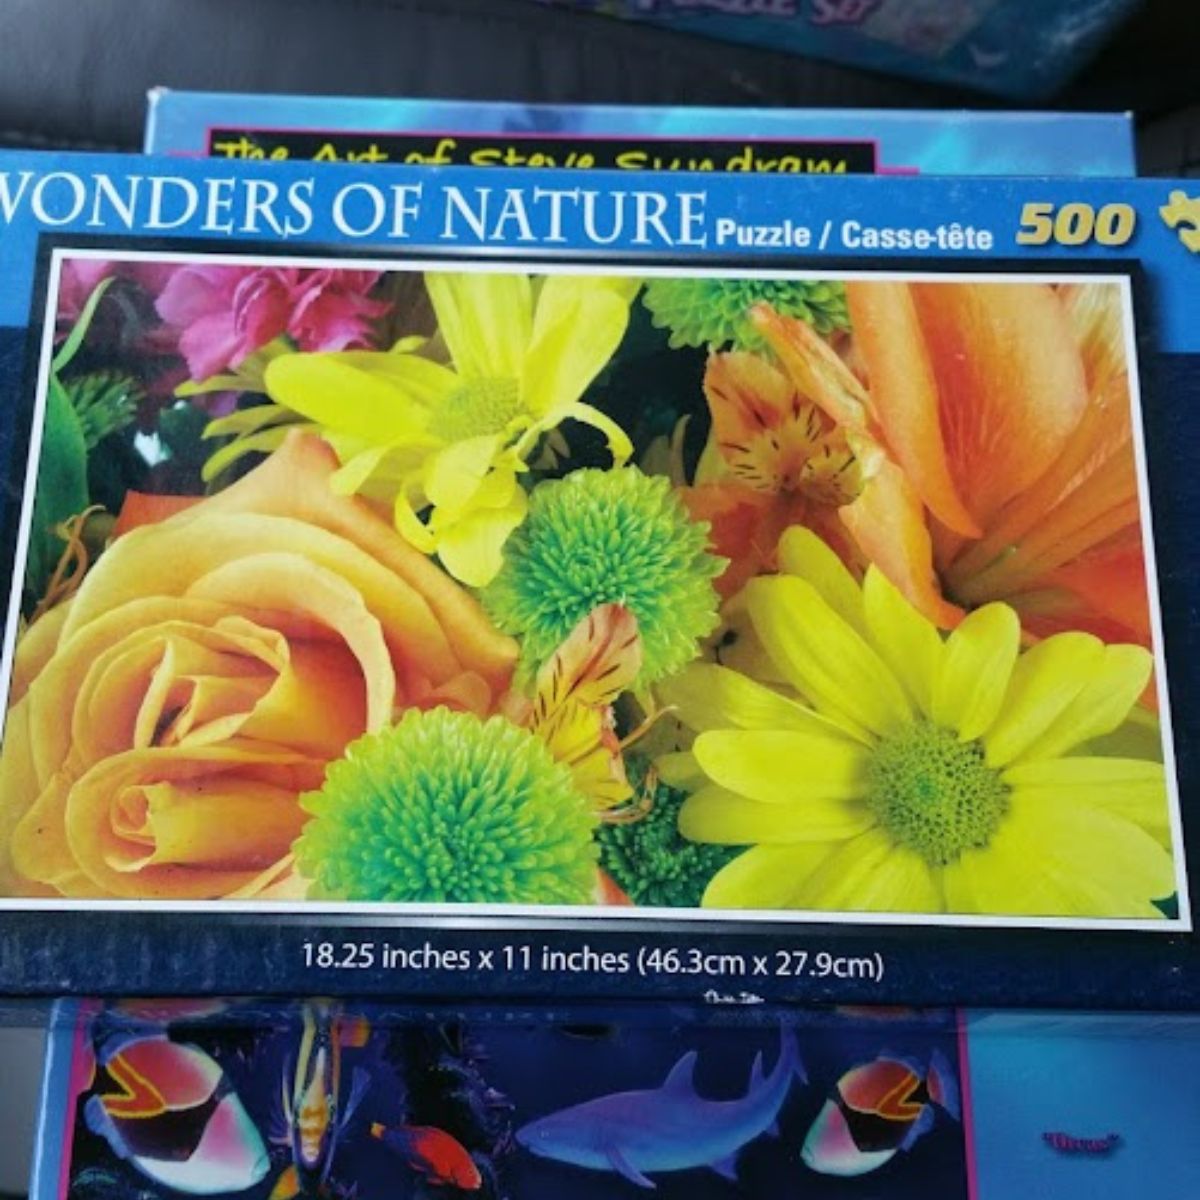 Wonders of nature puzzle box.